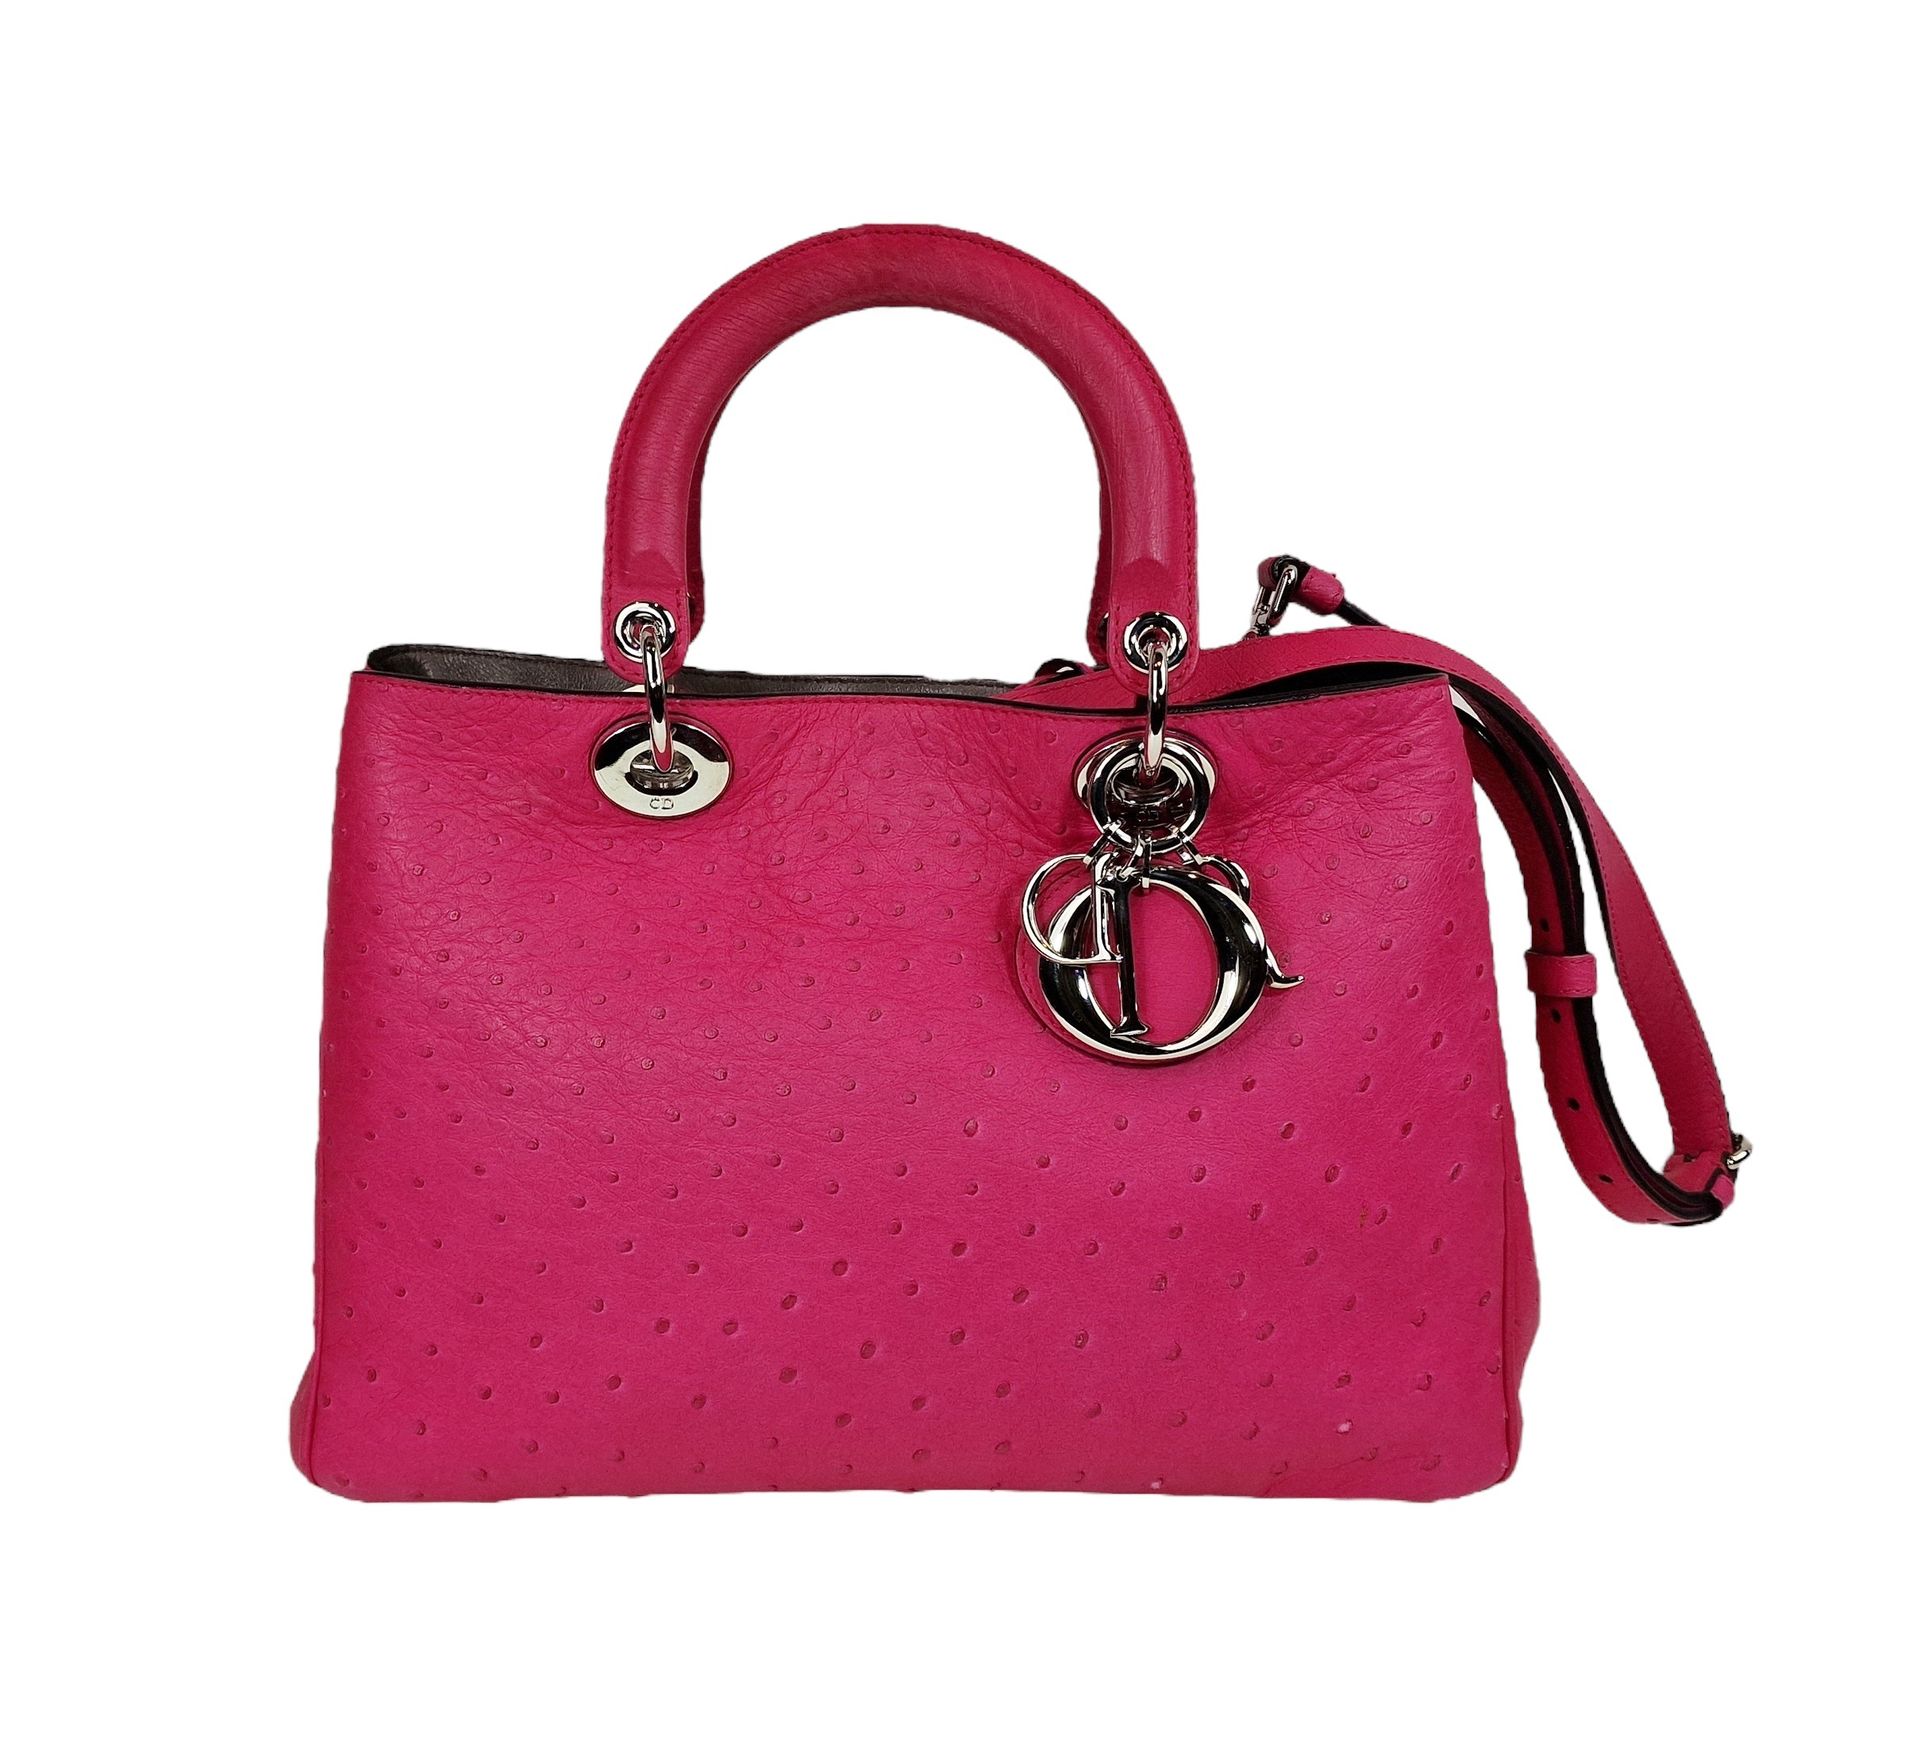 DIOR Sac à main "Diorissimo" Ostrich leather in fuchsia pink, double handle, rem&hellip;